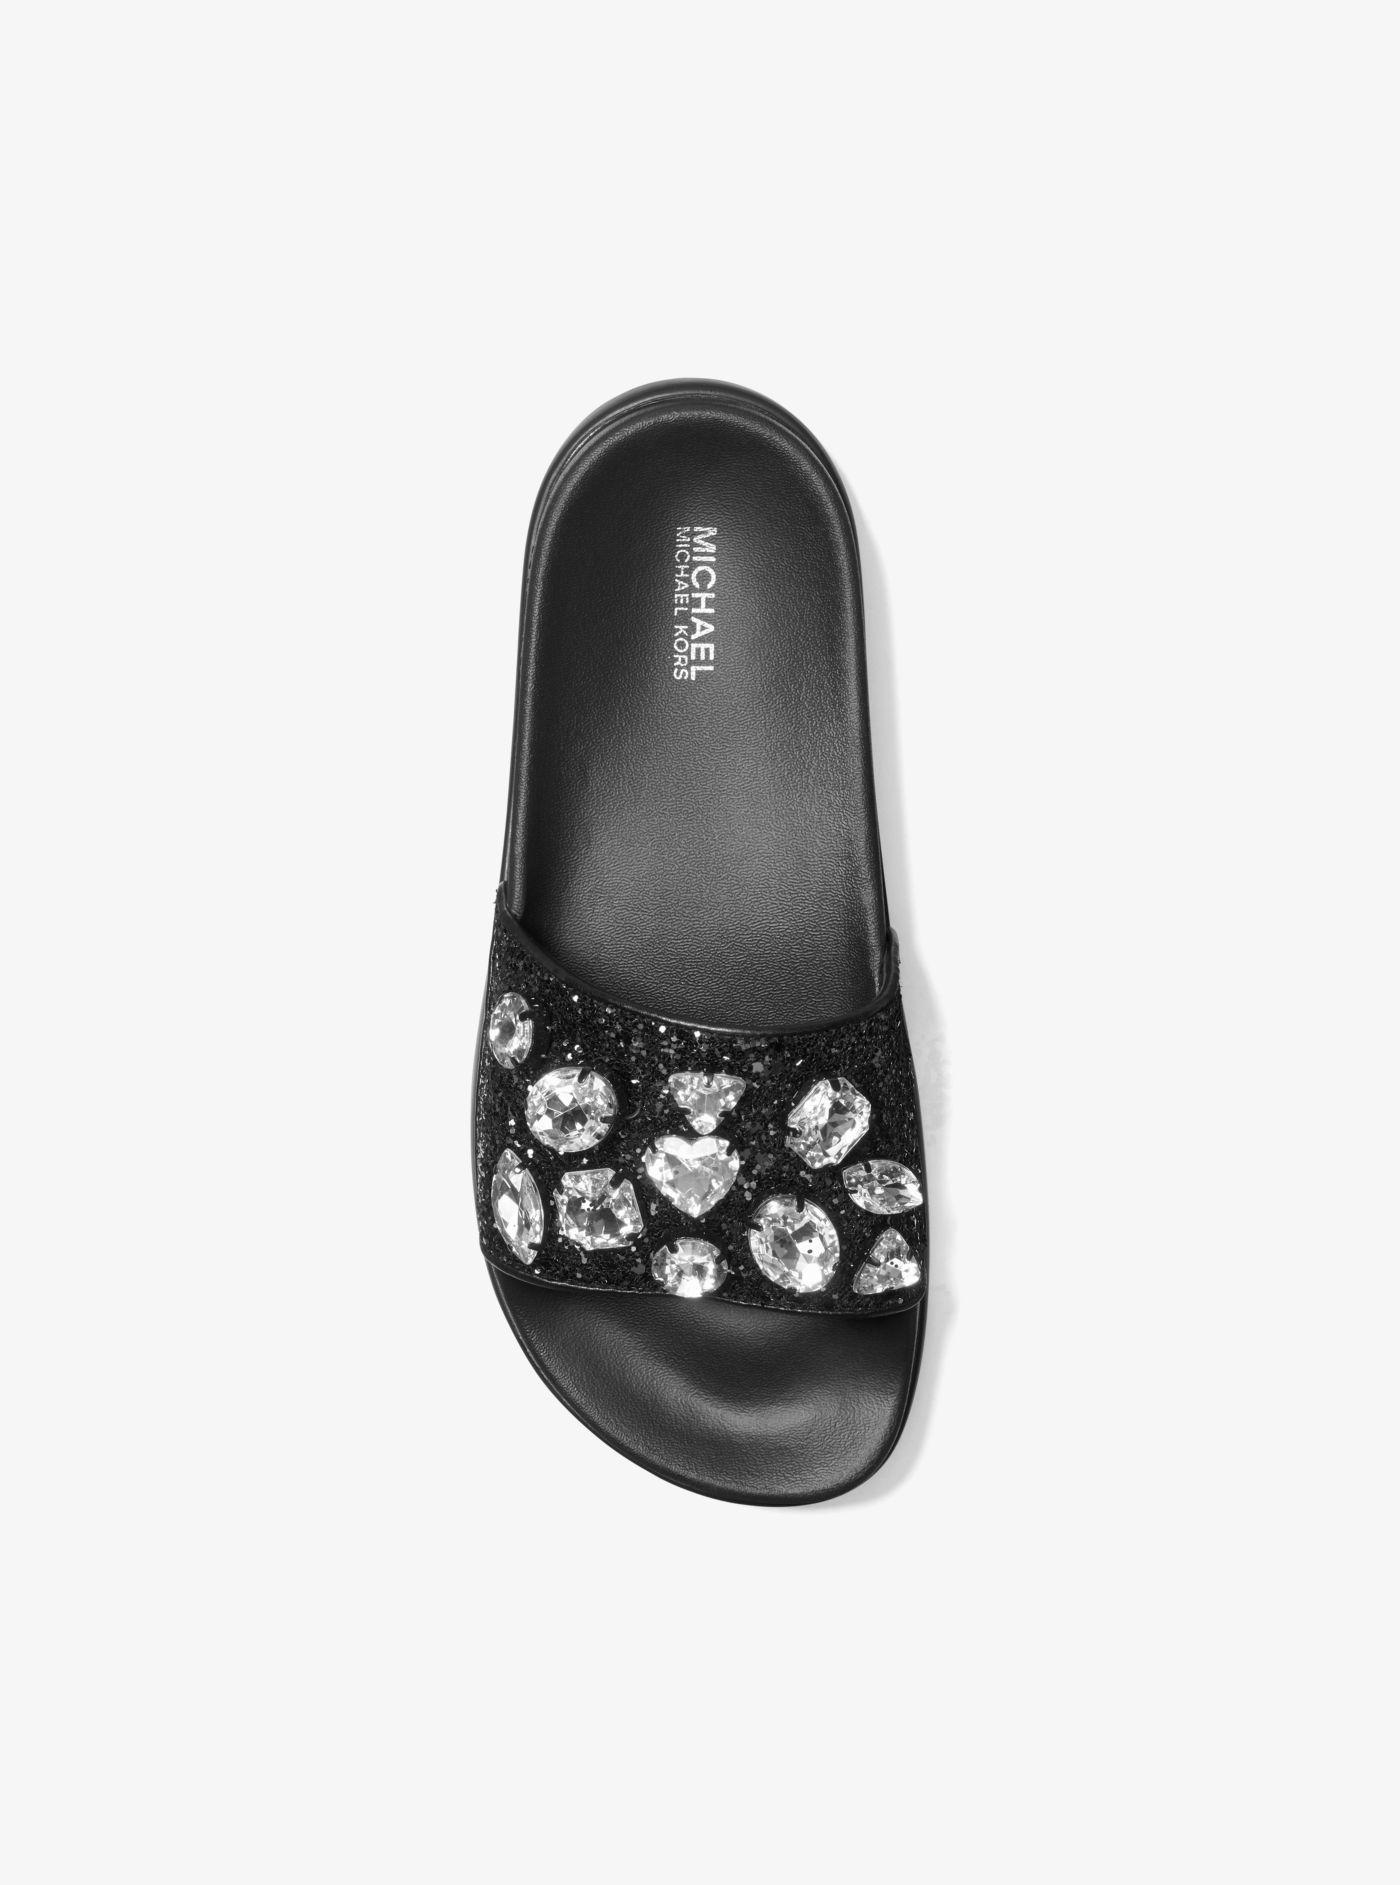 Michael Kors Tyra Jewel Embellished Glitter Slide Sandal in Black | Lyst